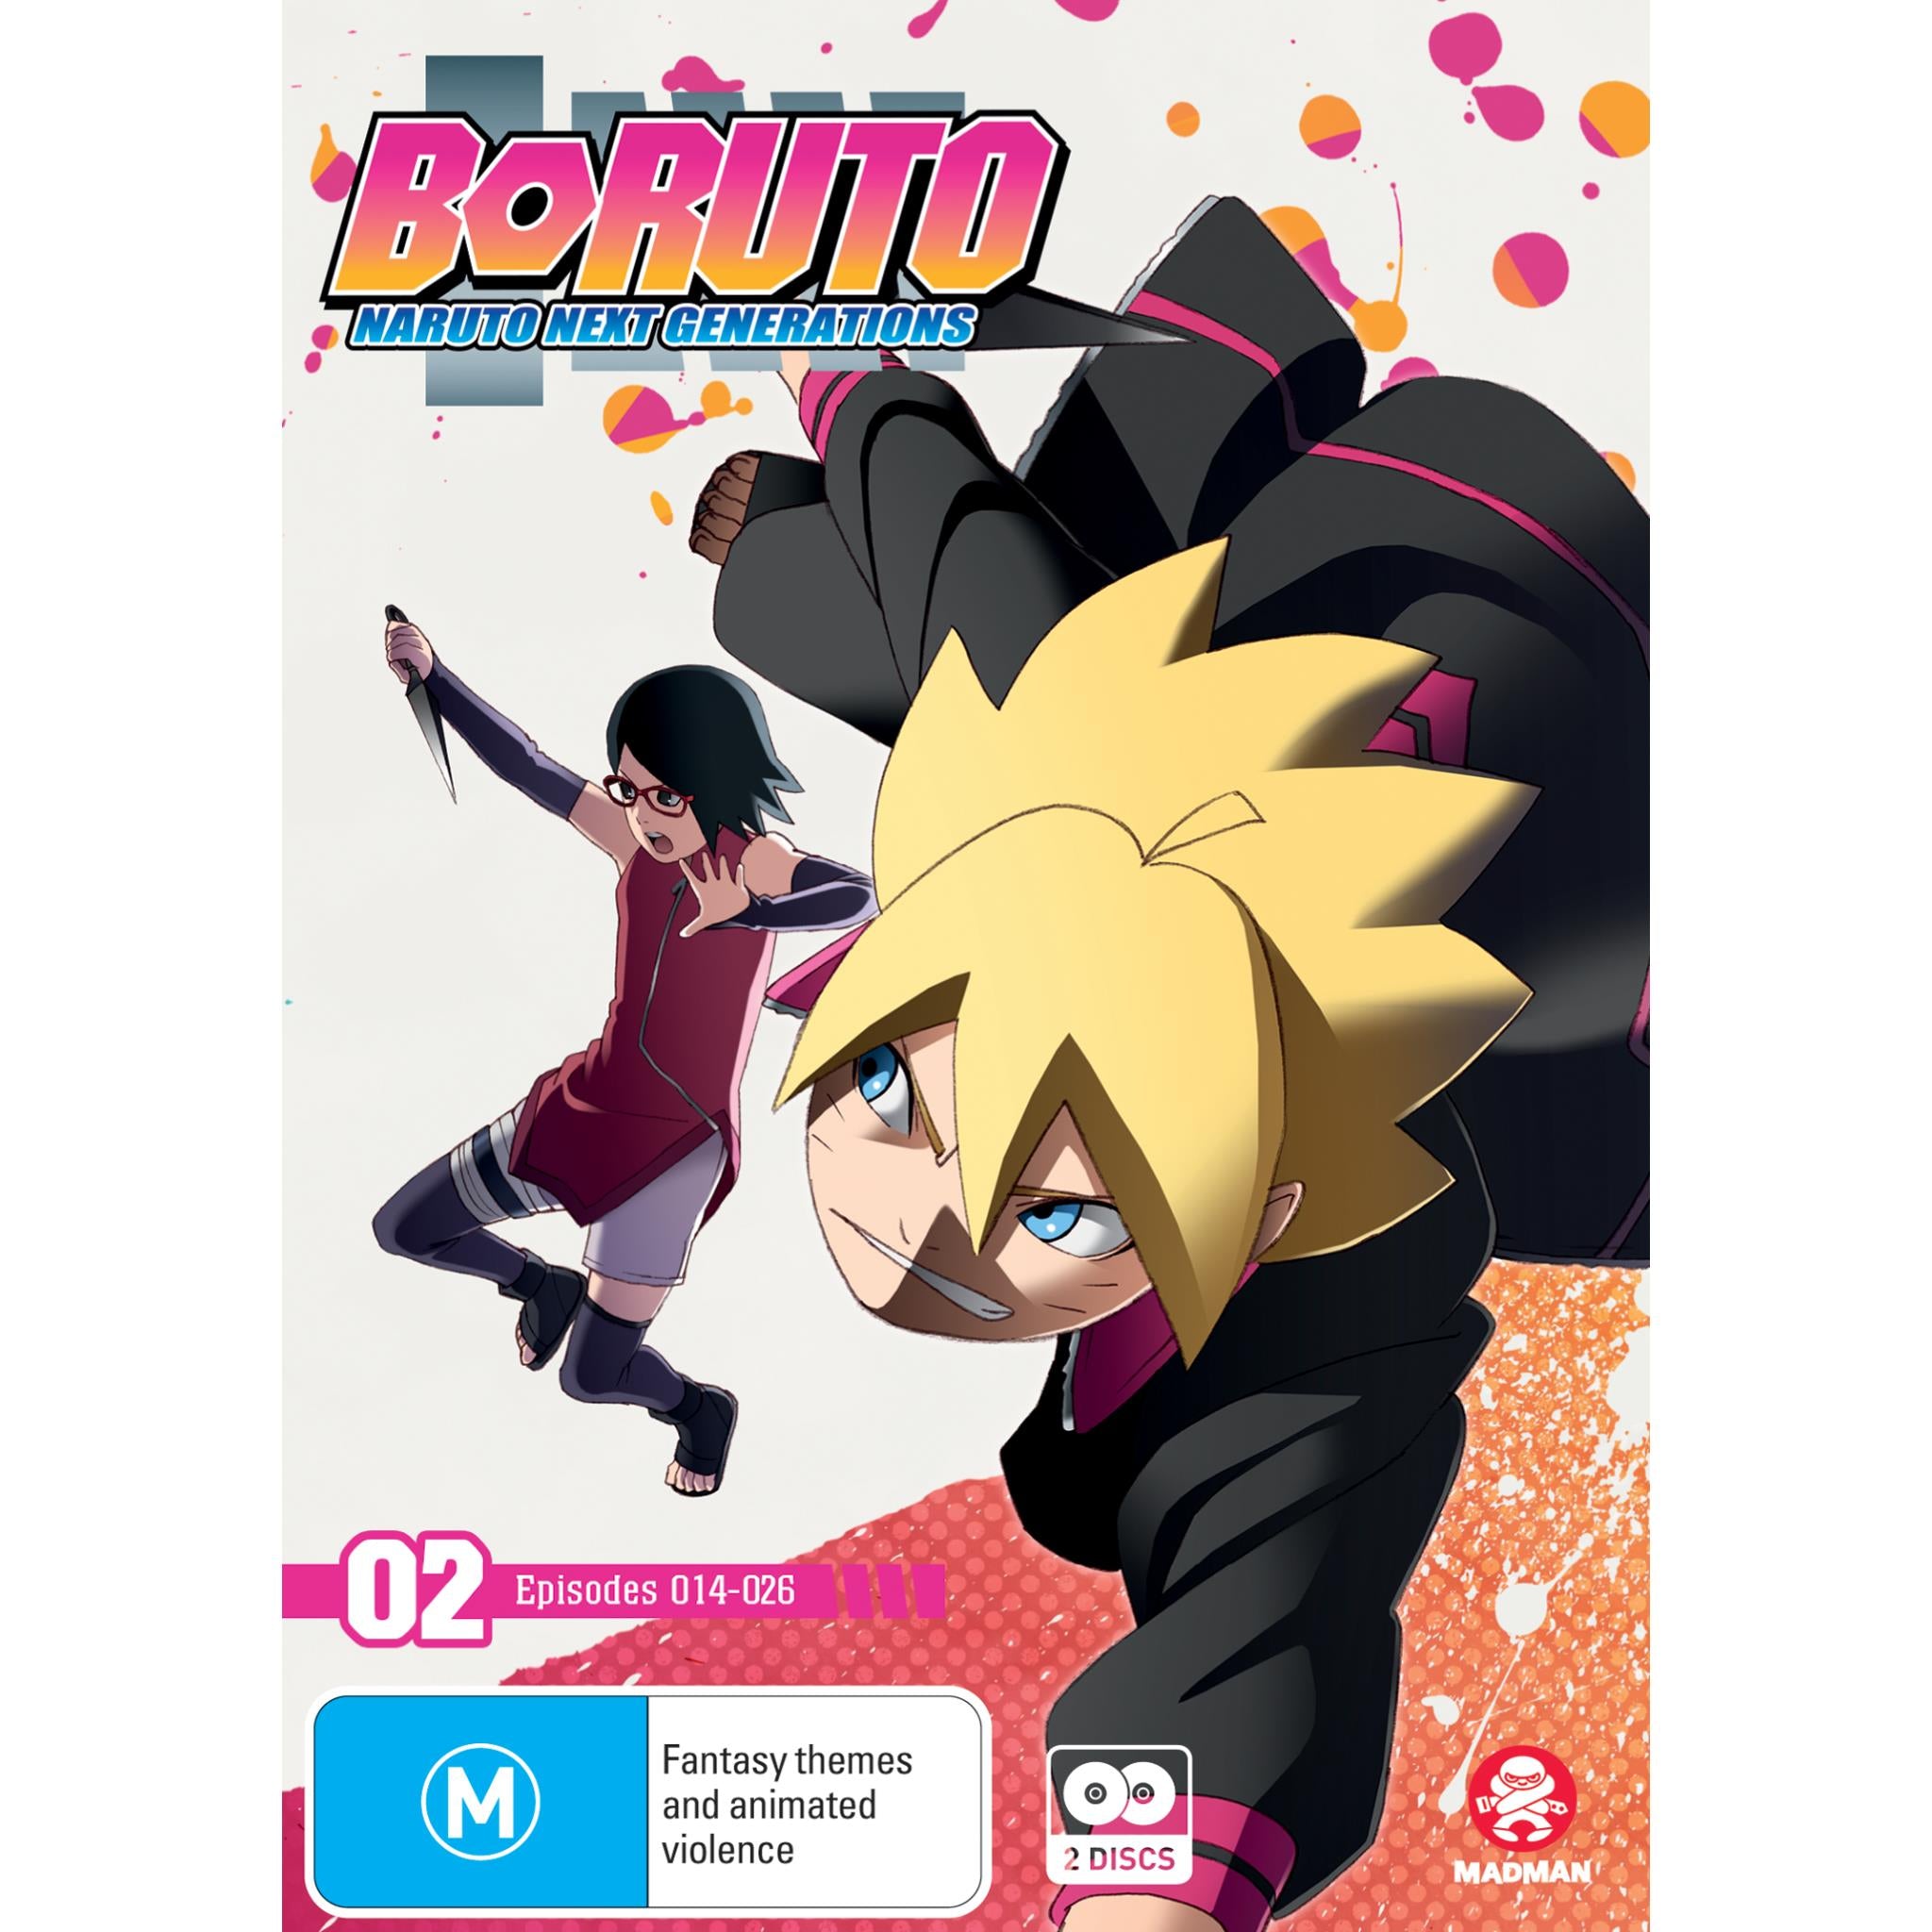 Episode 154 - Boruto: Naruto Next Generations - Anime News Network